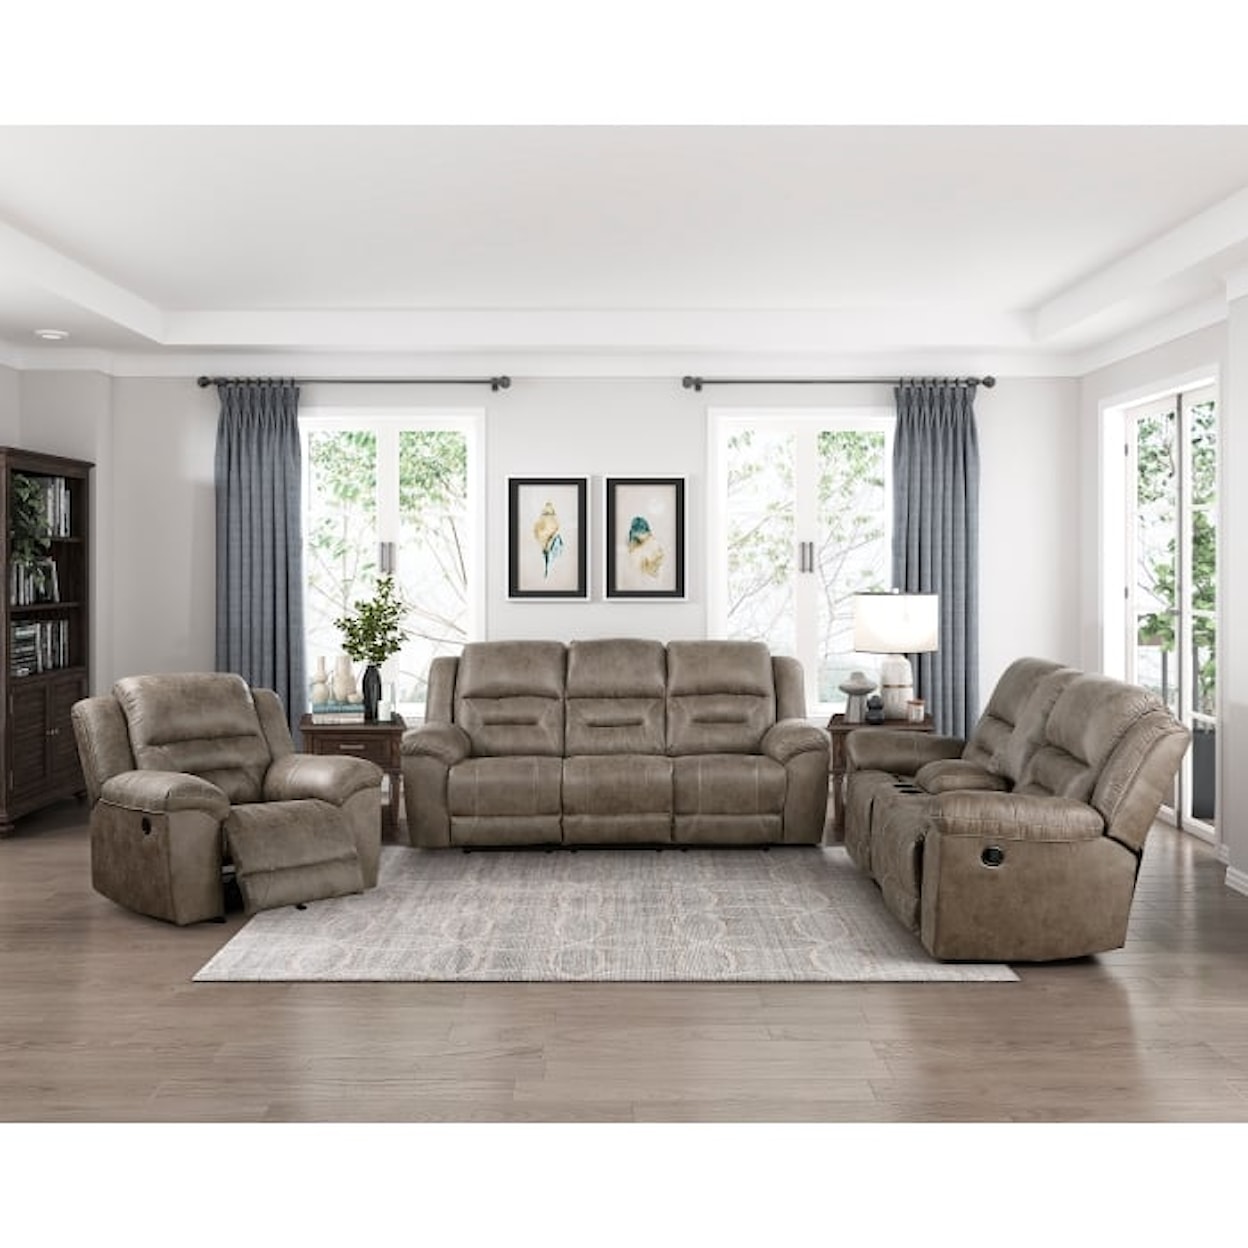 Homelegance Hazen Double Reclining Sofa